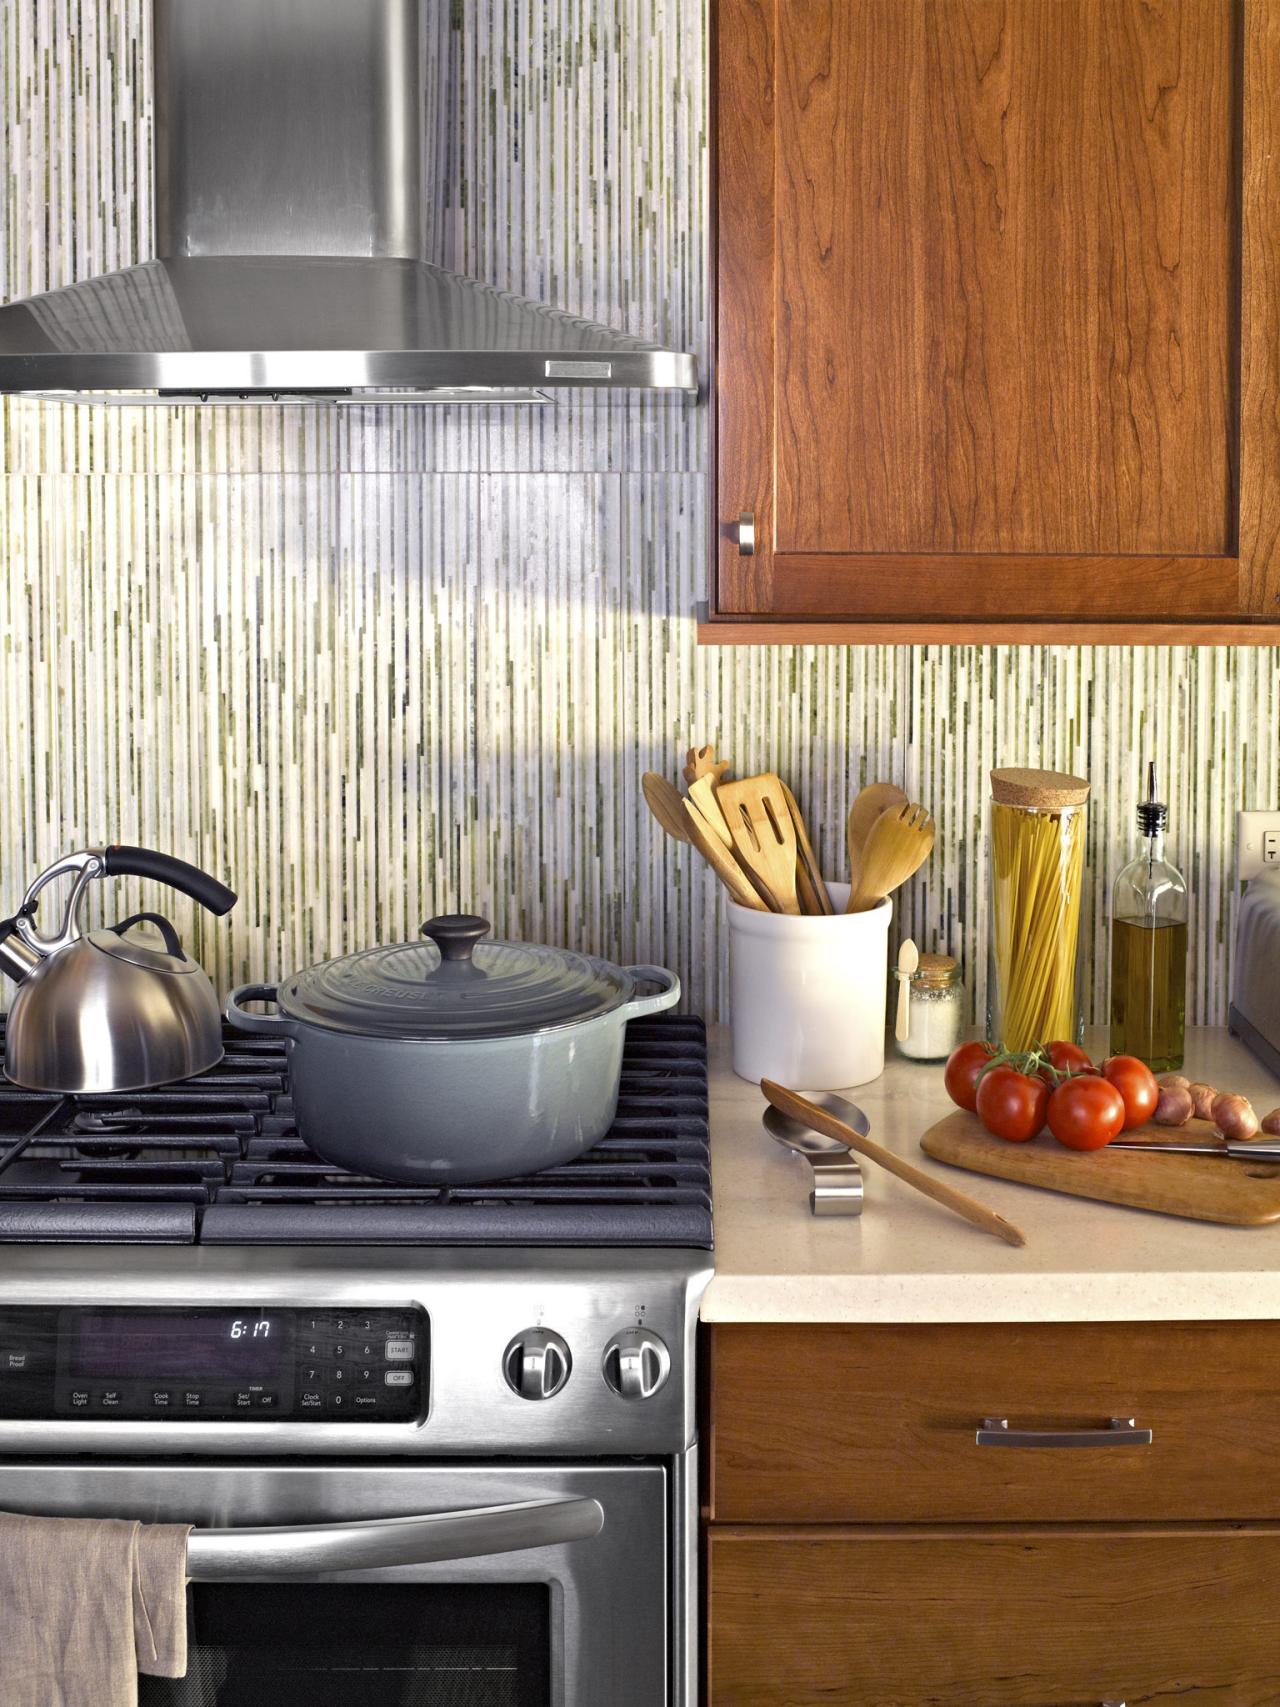 design ideas for kitchen countertops